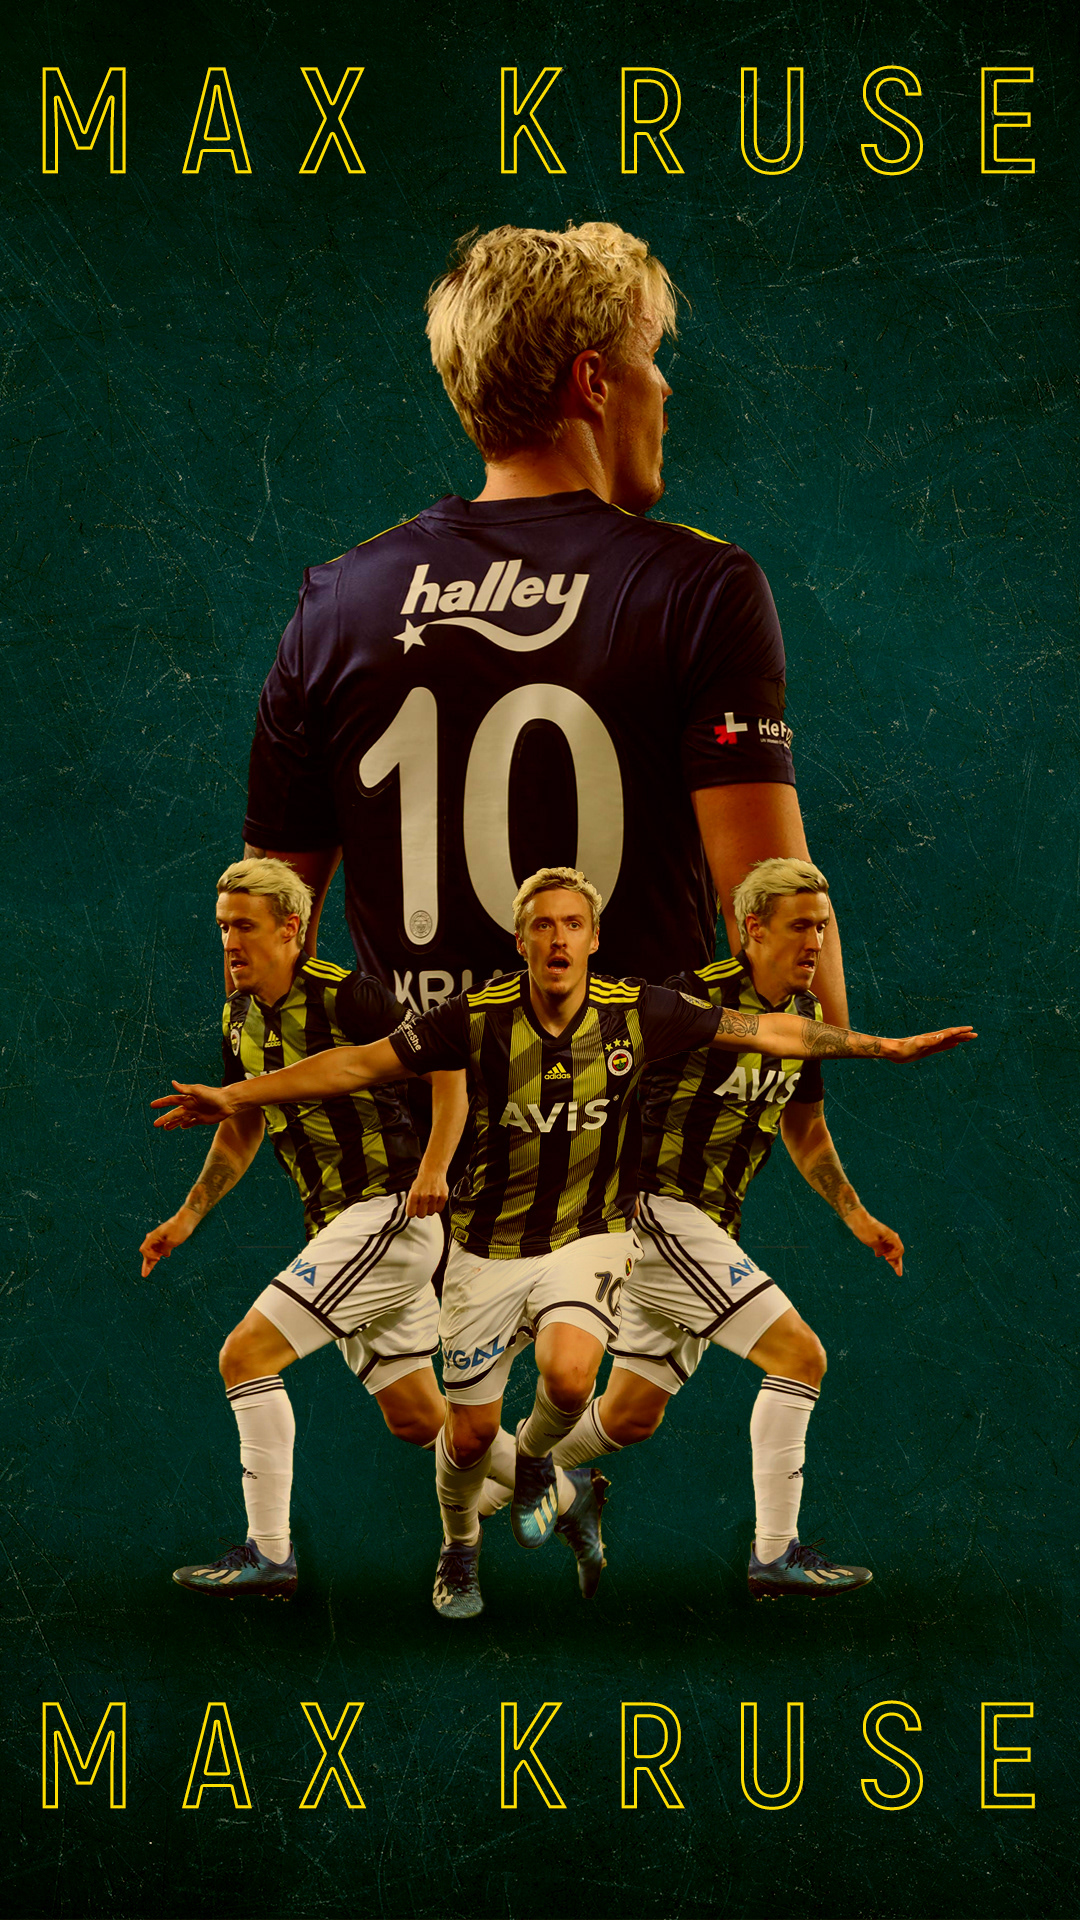 Max Kruse MAX Kruse Fenerbahçe fb Max kruse fenerbahçe fb fan art Fan Art